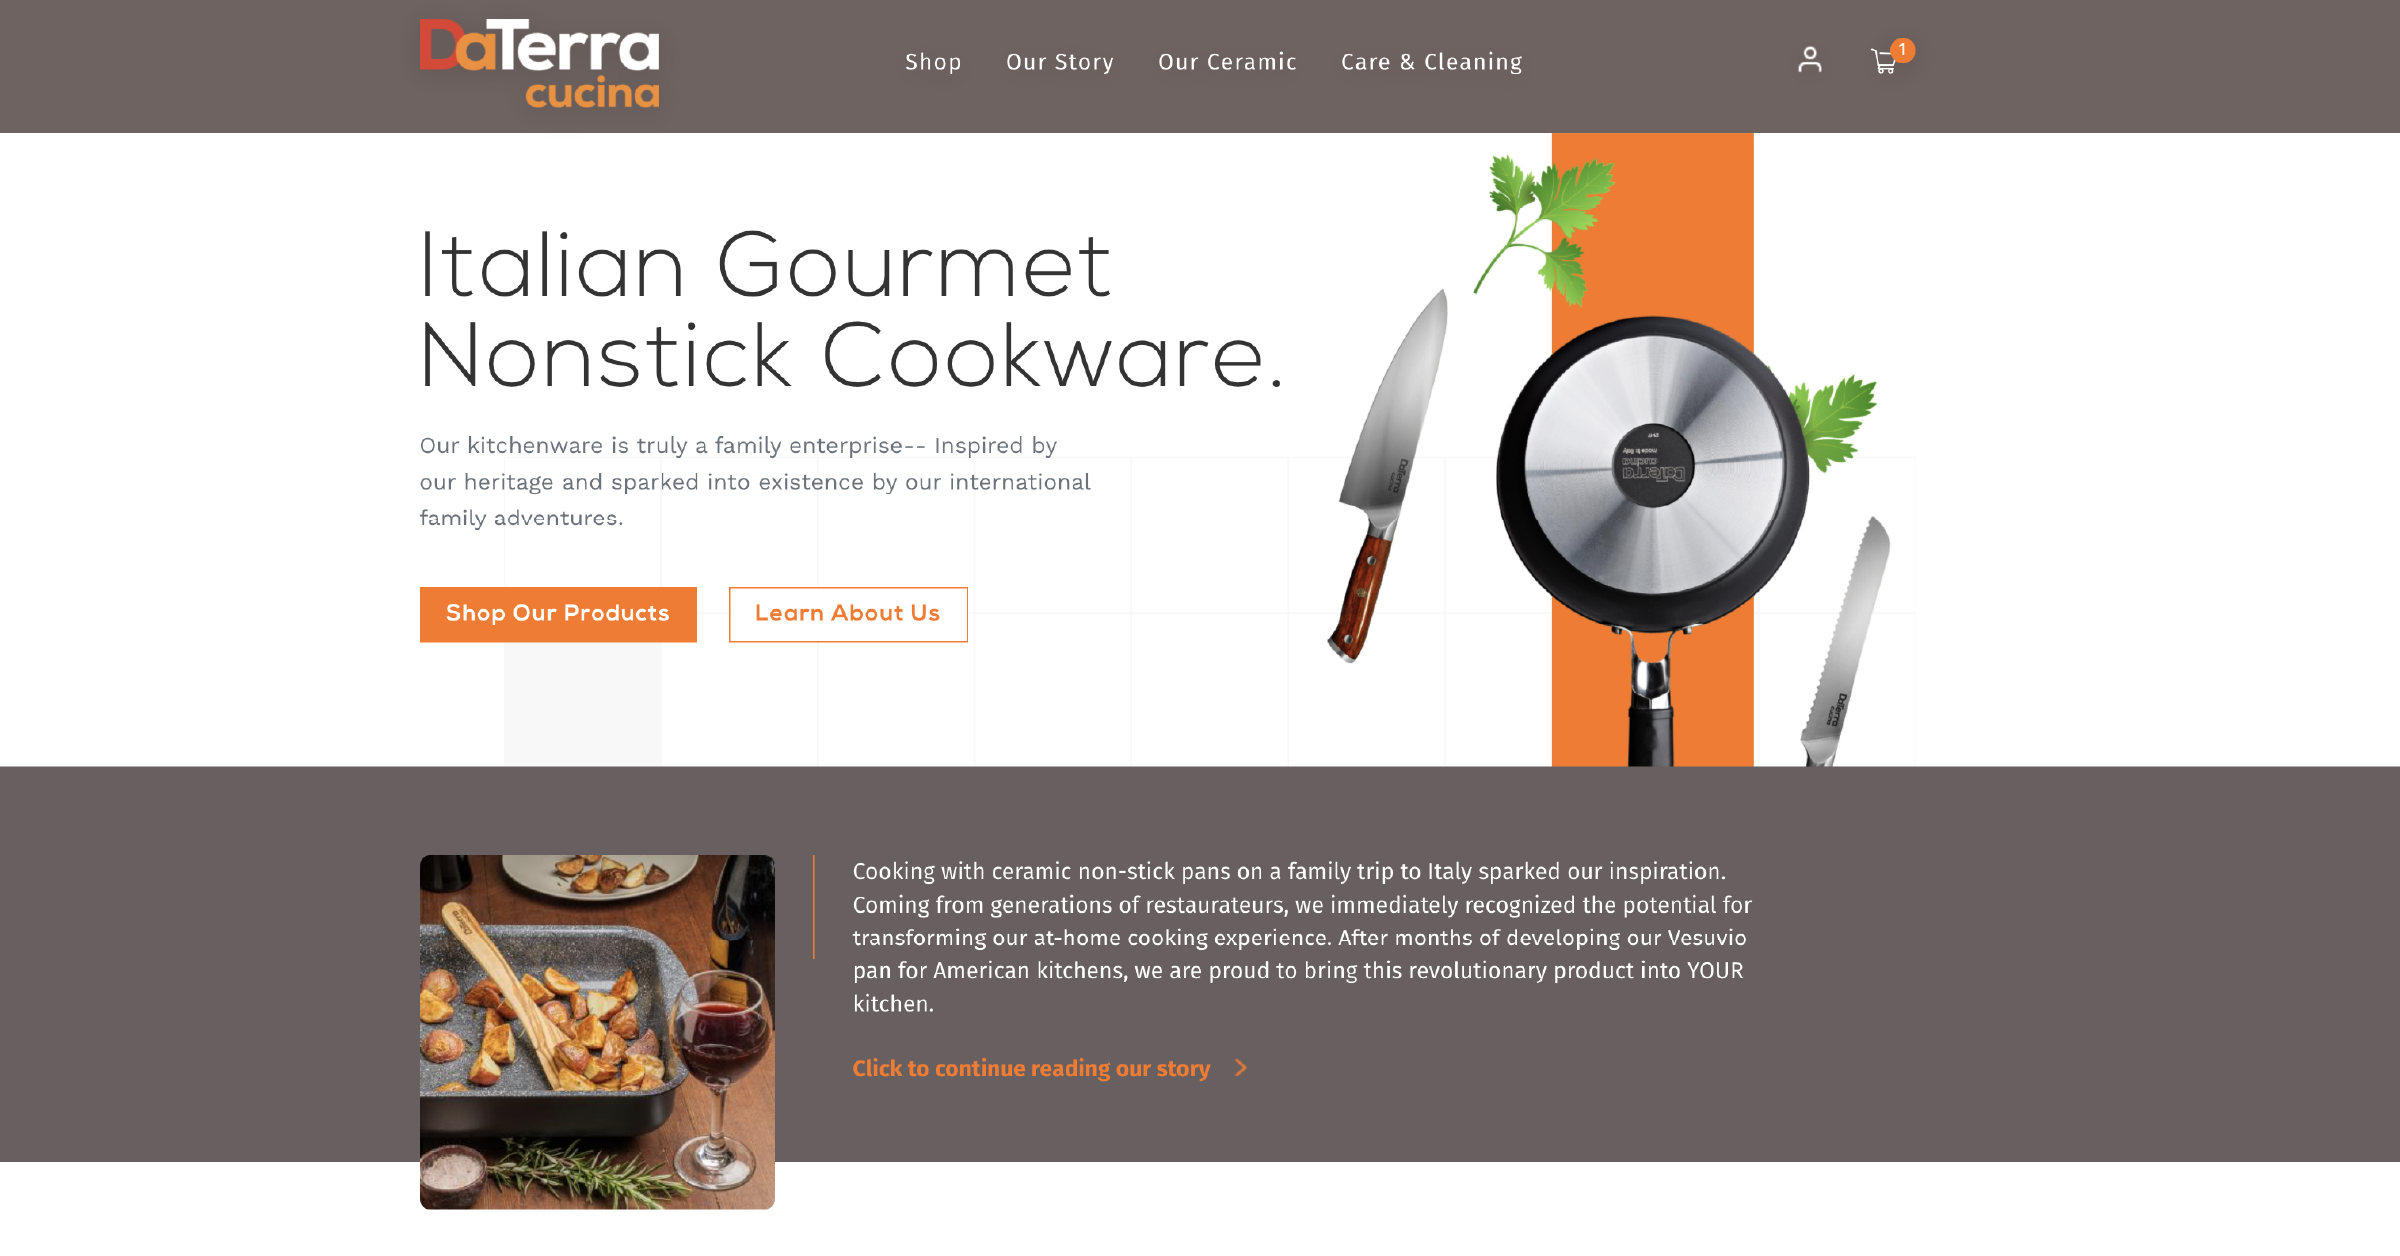 DaTerra Cucina Professional 13 Inch Nonstick Frying Pan | Italian Made  Ceramic Nonstick Pan Sauté Pan, Chefs Pan, Non Stick Skillet Pan for  Cooking